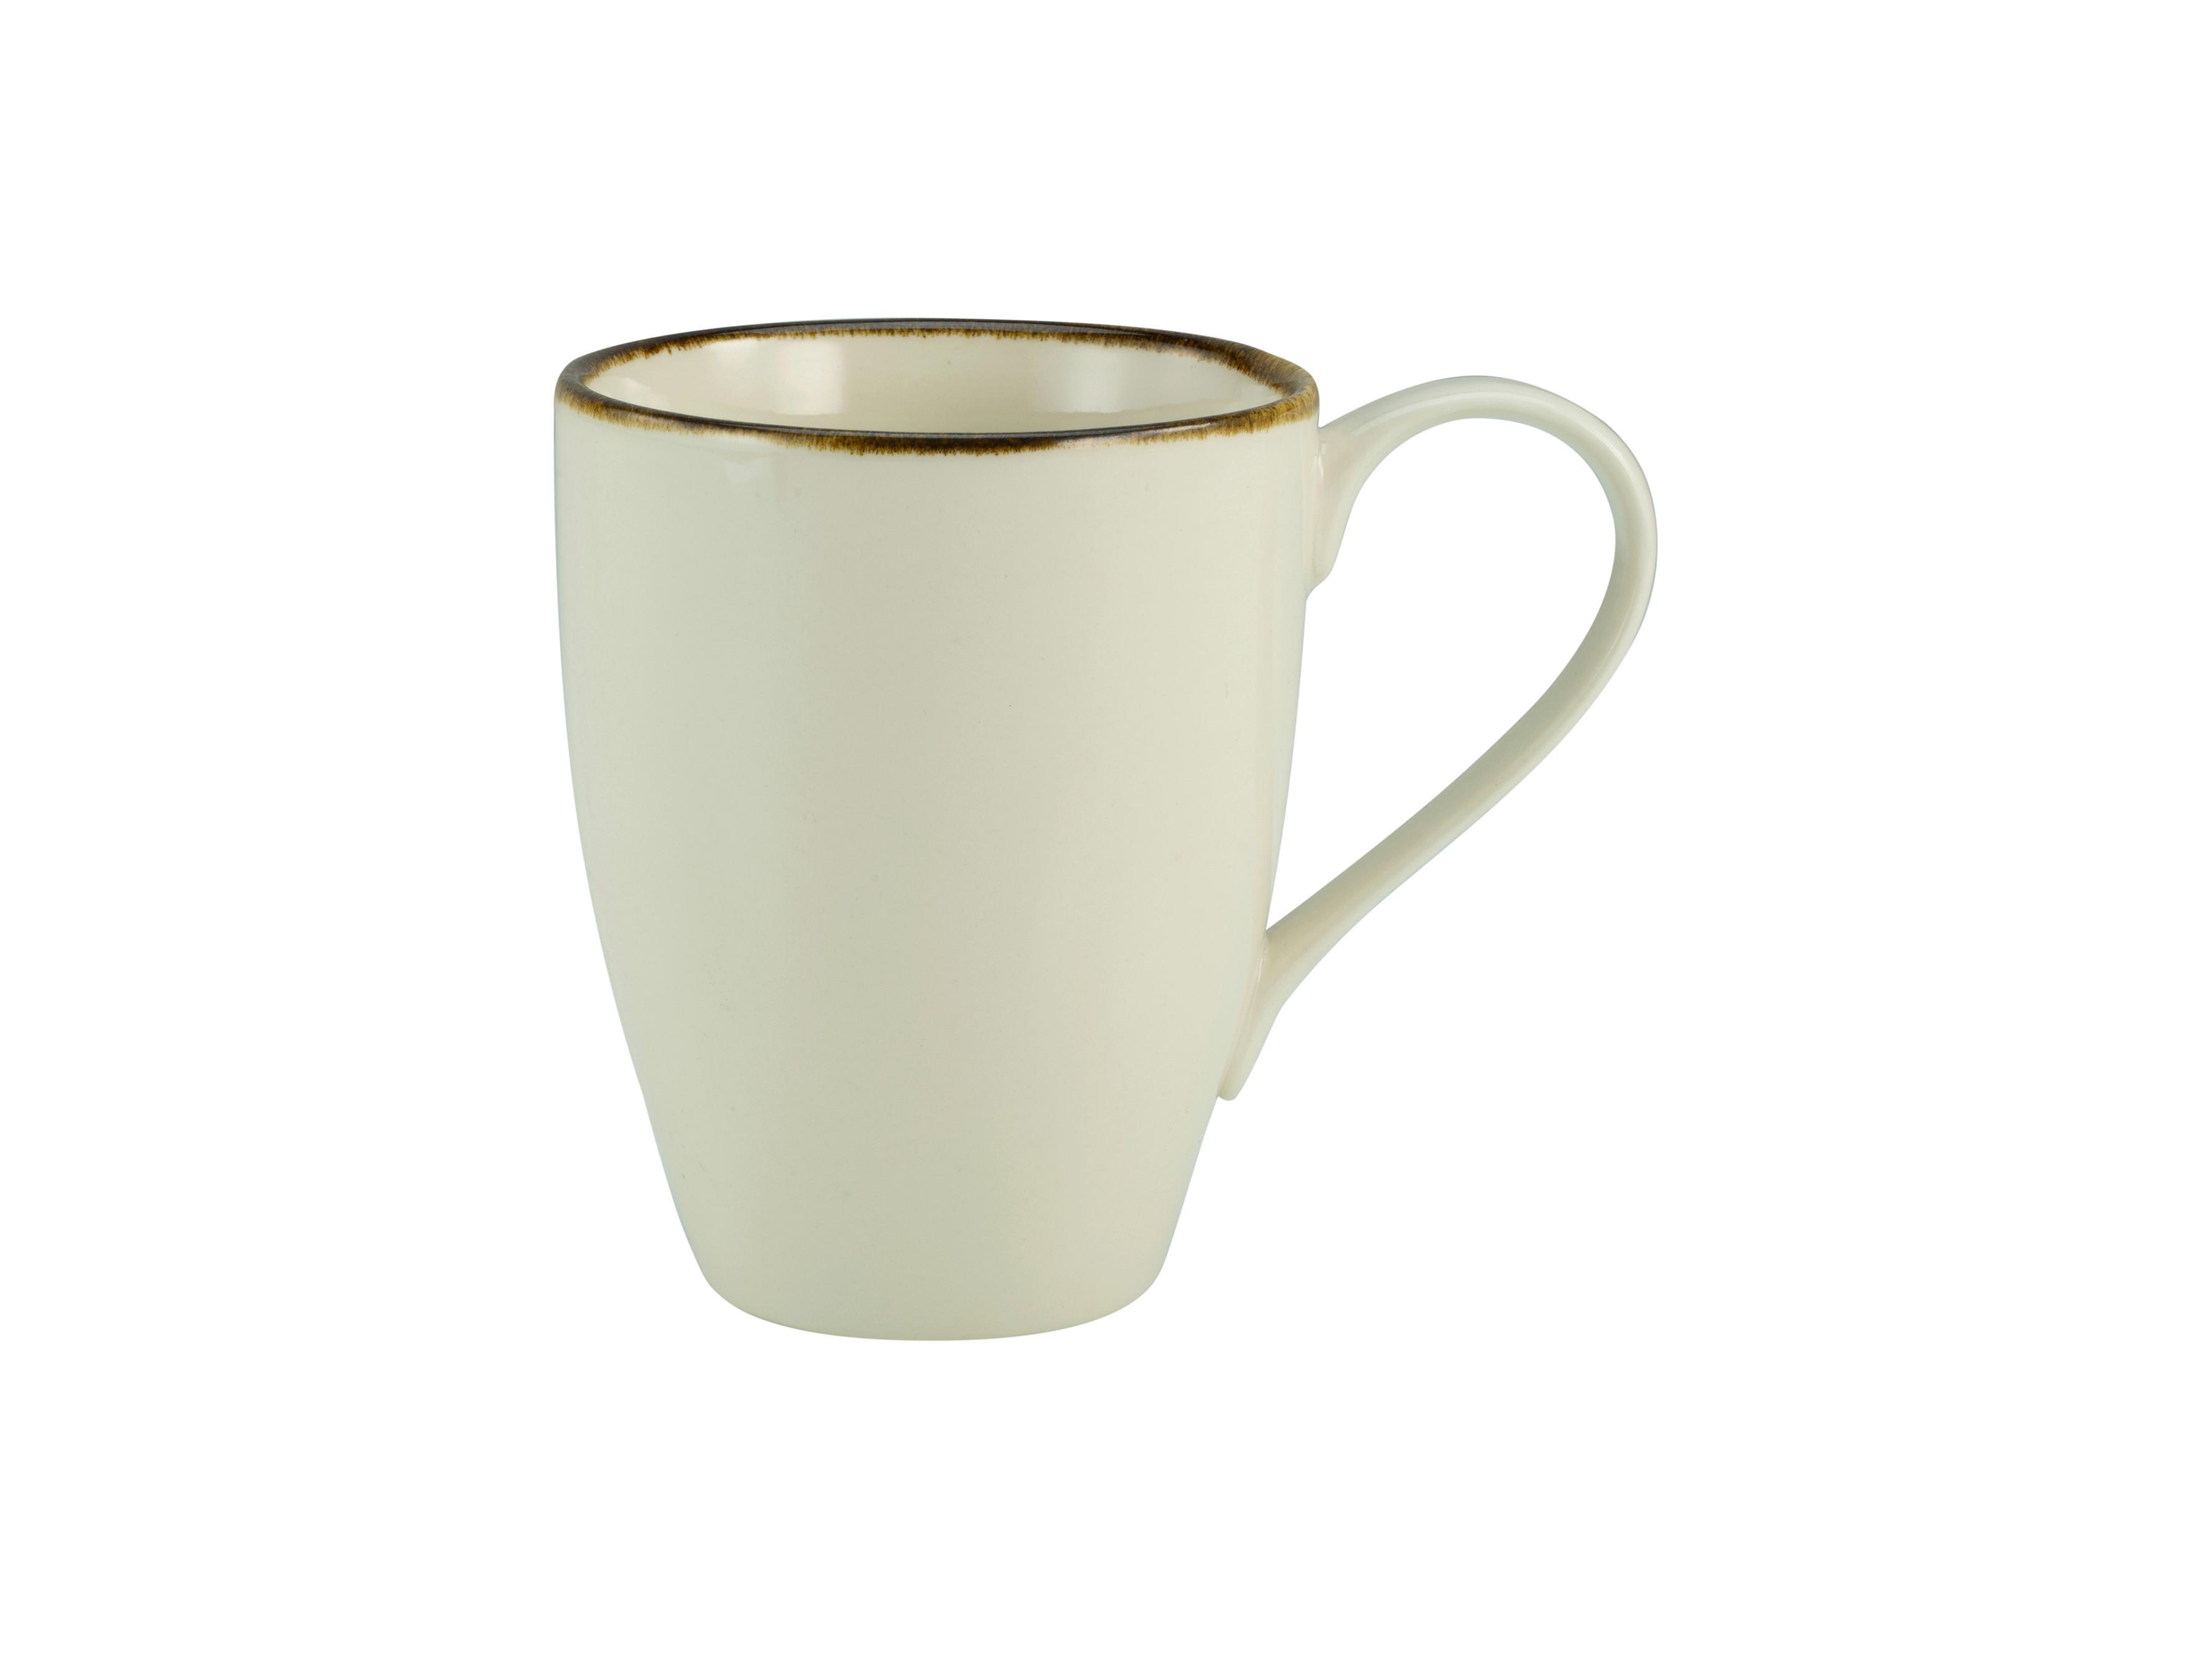 Hrnček Na Kávu Linen, 330 Ml - biela/krémová, keramika (13/9/11cm) - Premium Living